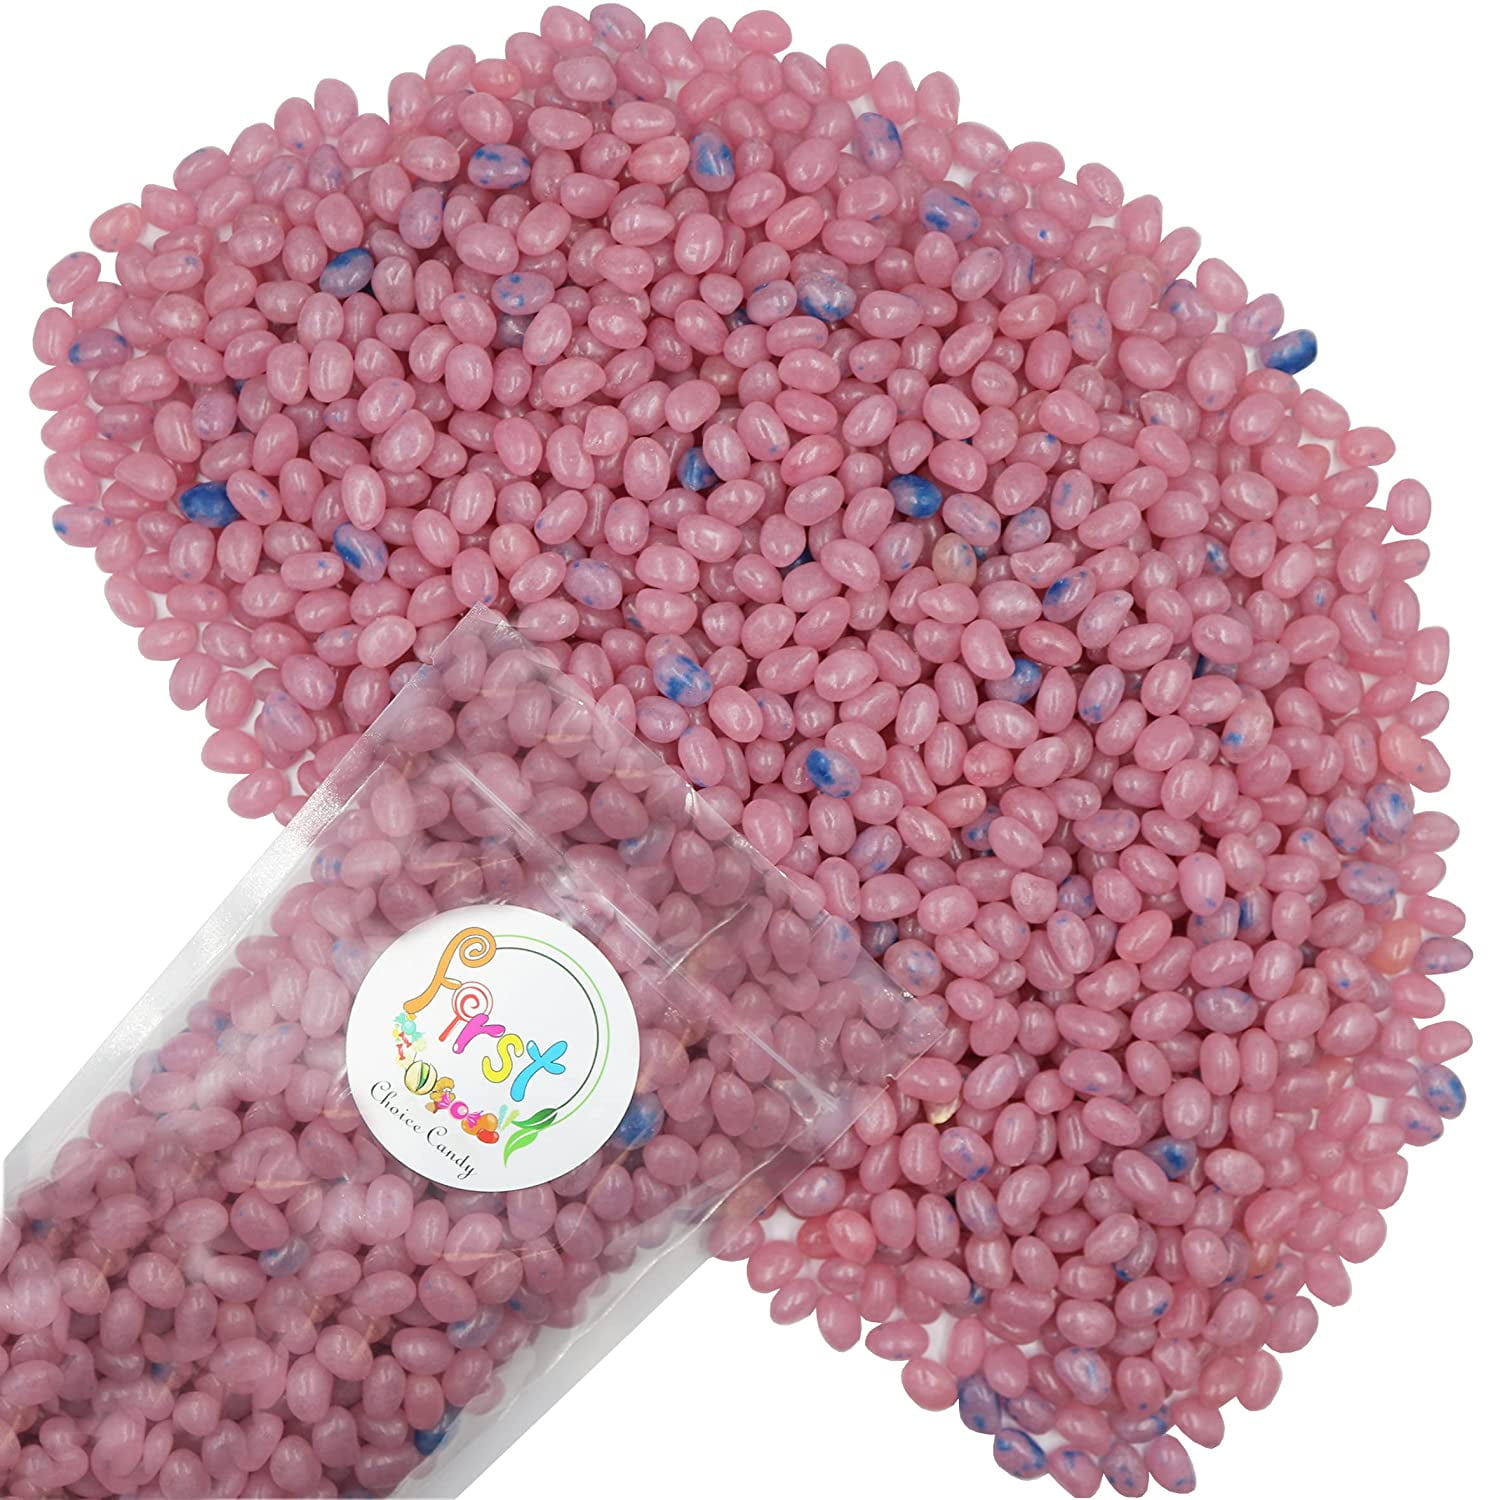 Pink Passion bubblegum bead bulk mix